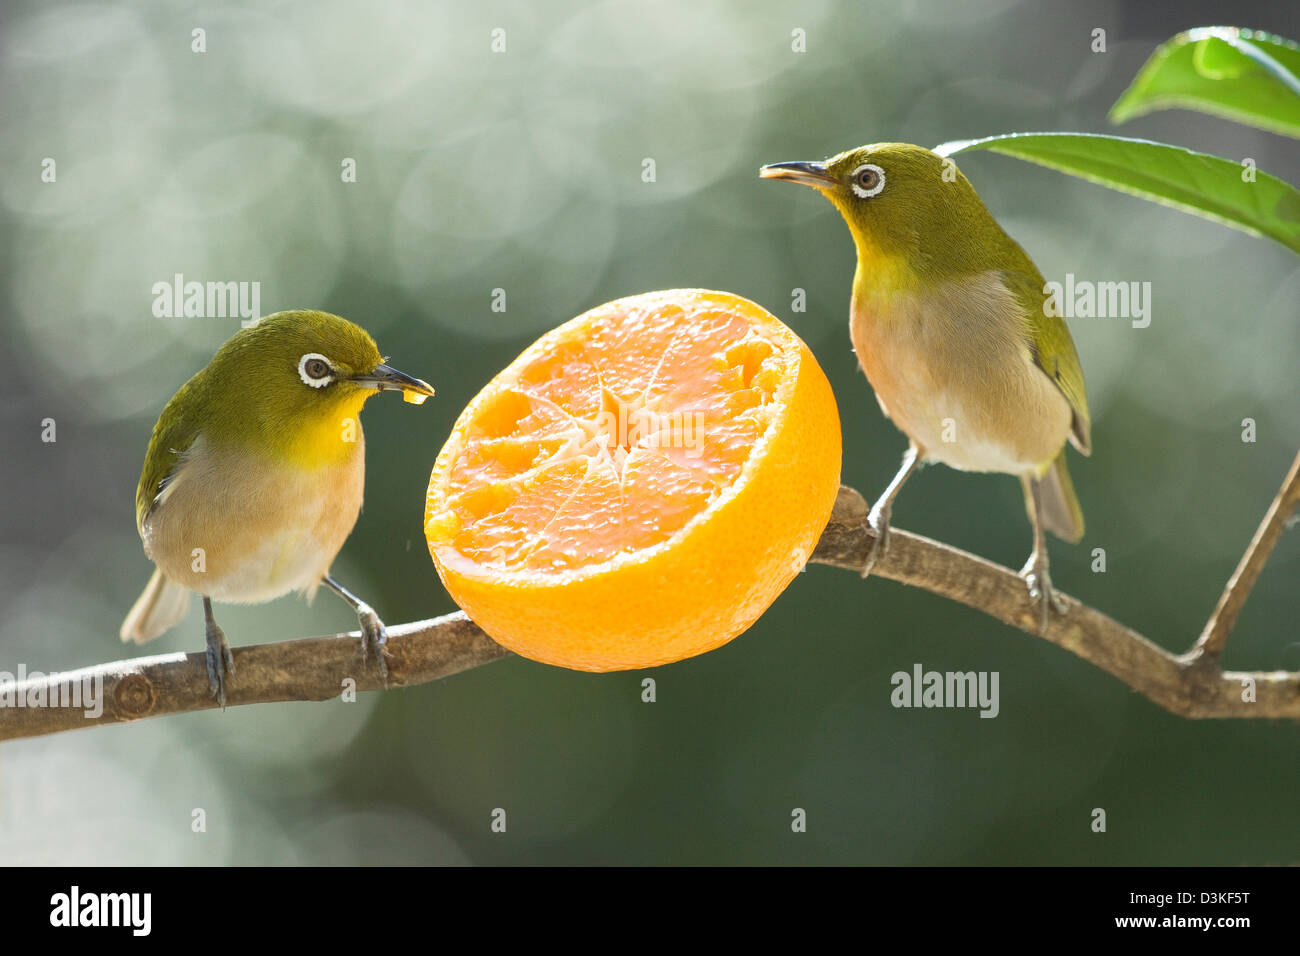 Japanese White Eye birds and tangerine Stock Photo